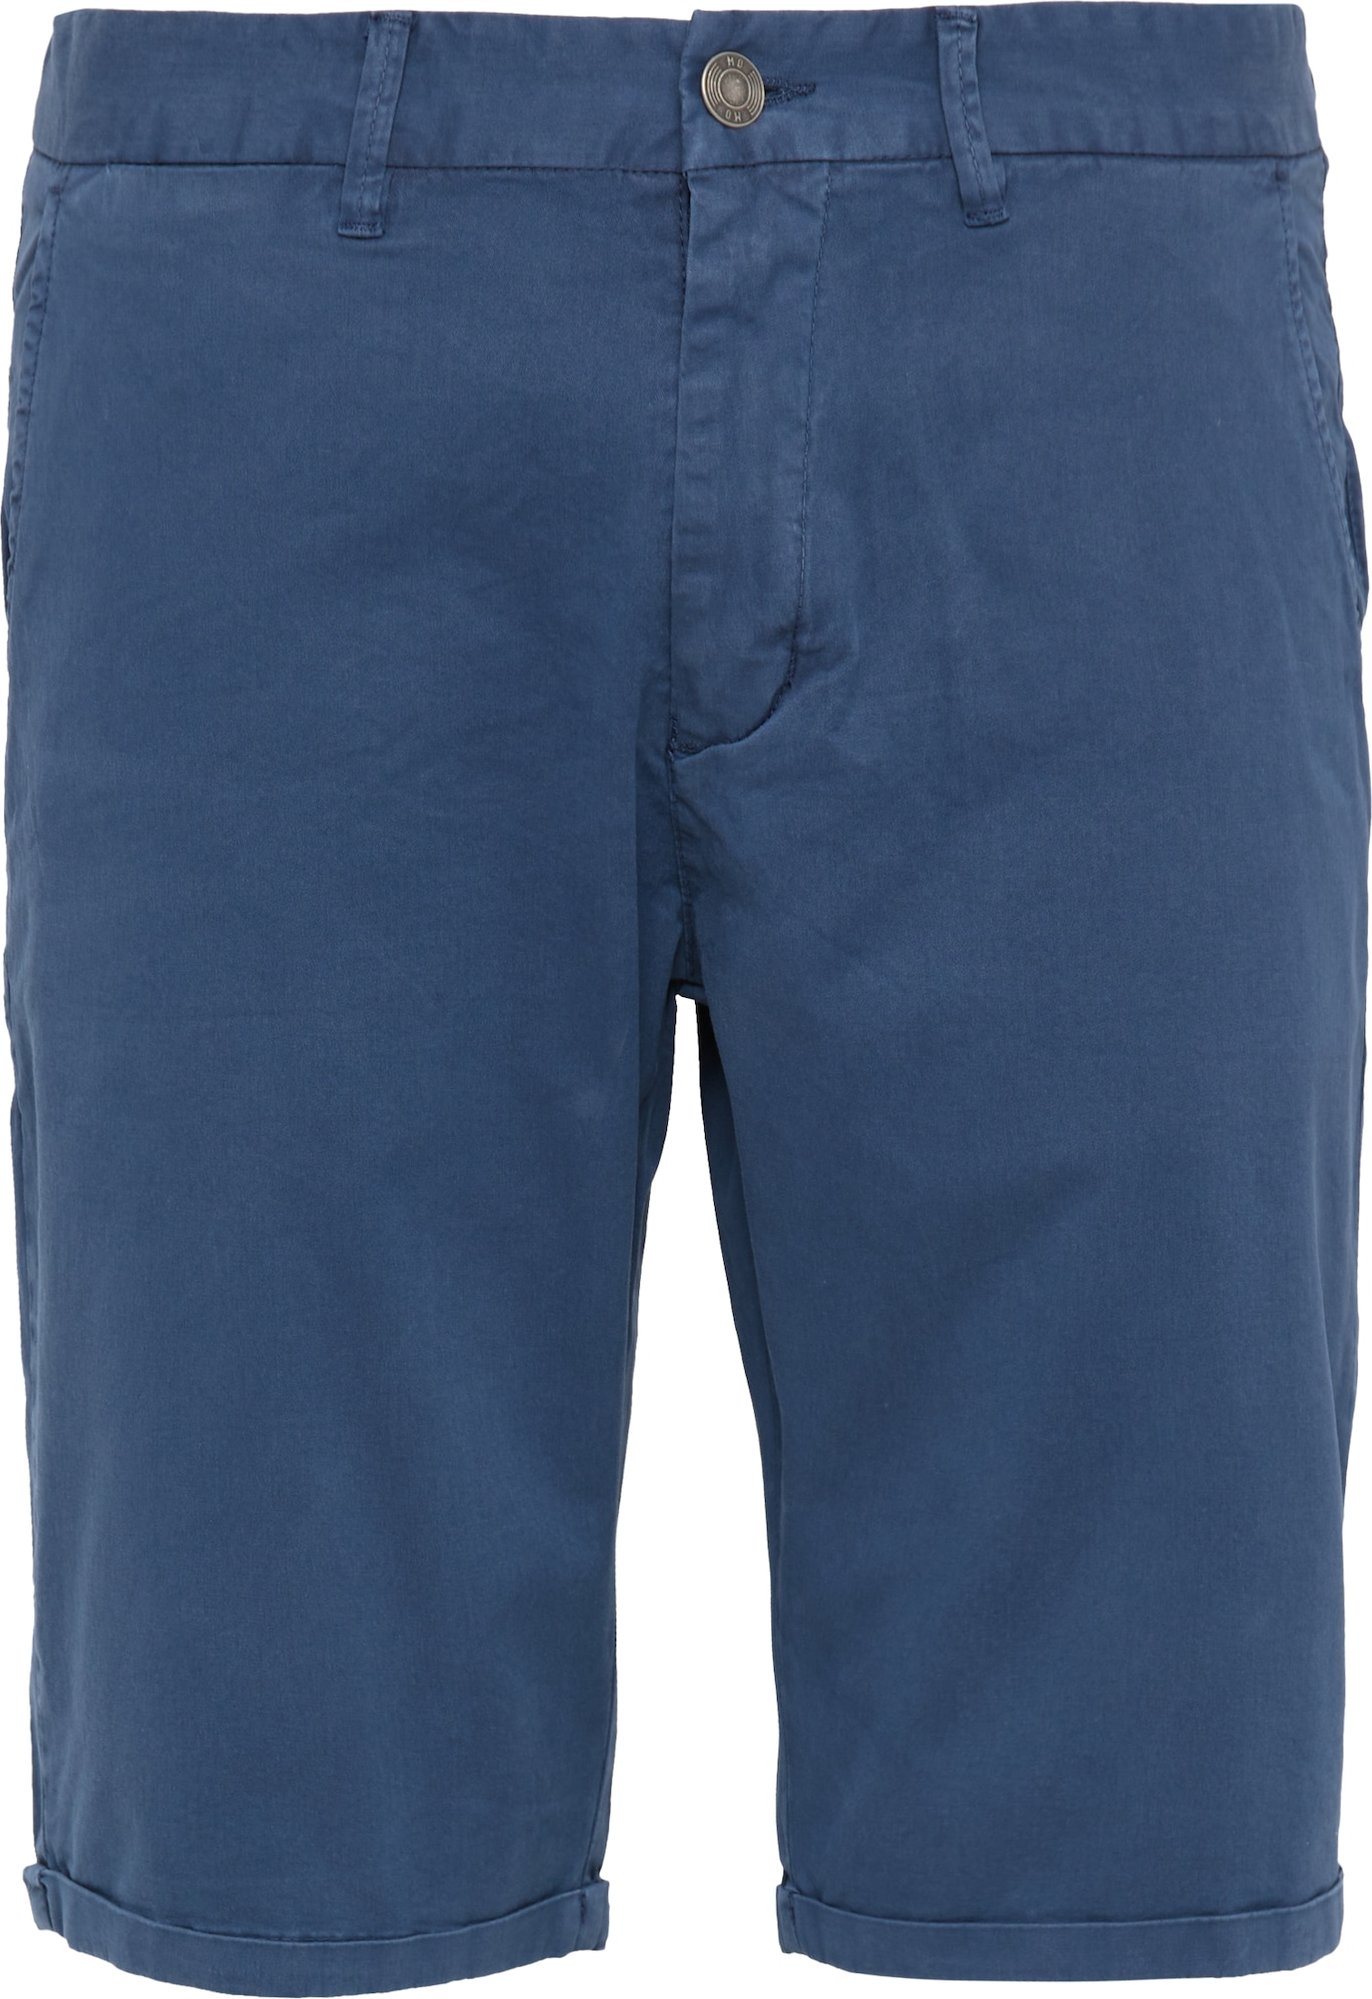 MO Chino kalhoty marine modrá